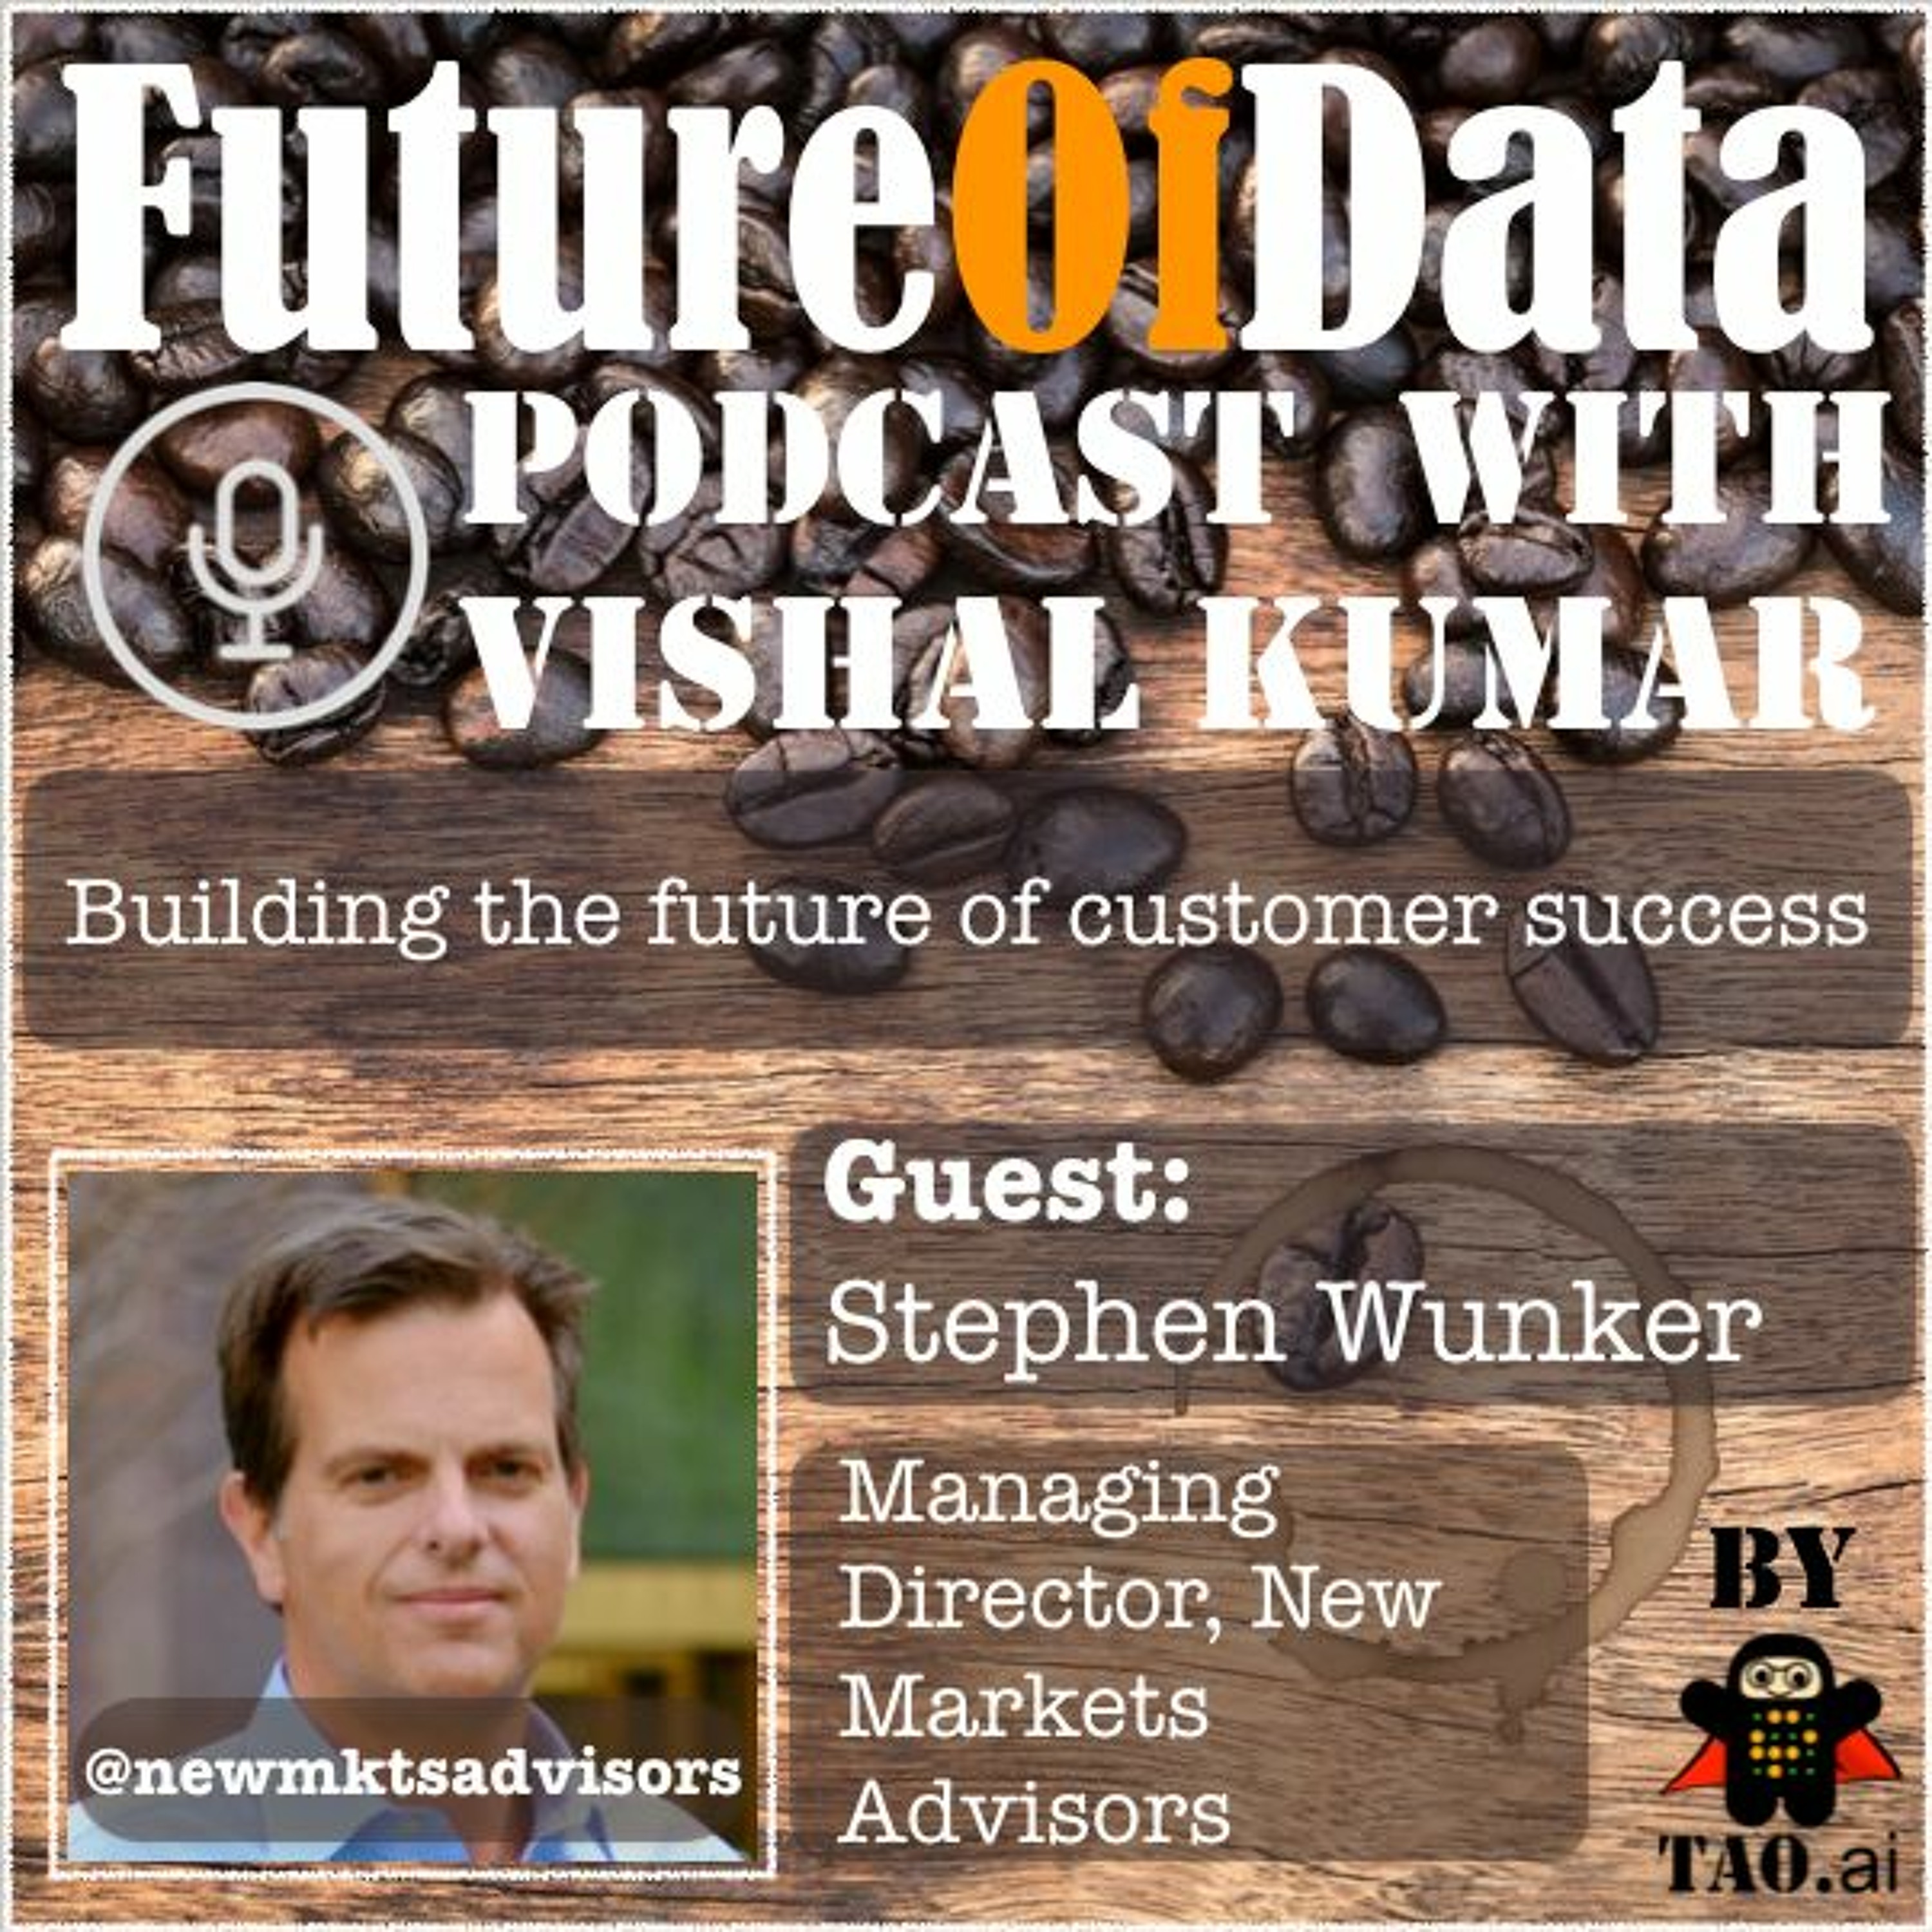 Stephen Wunker on future of customer success through cost innovation&  data